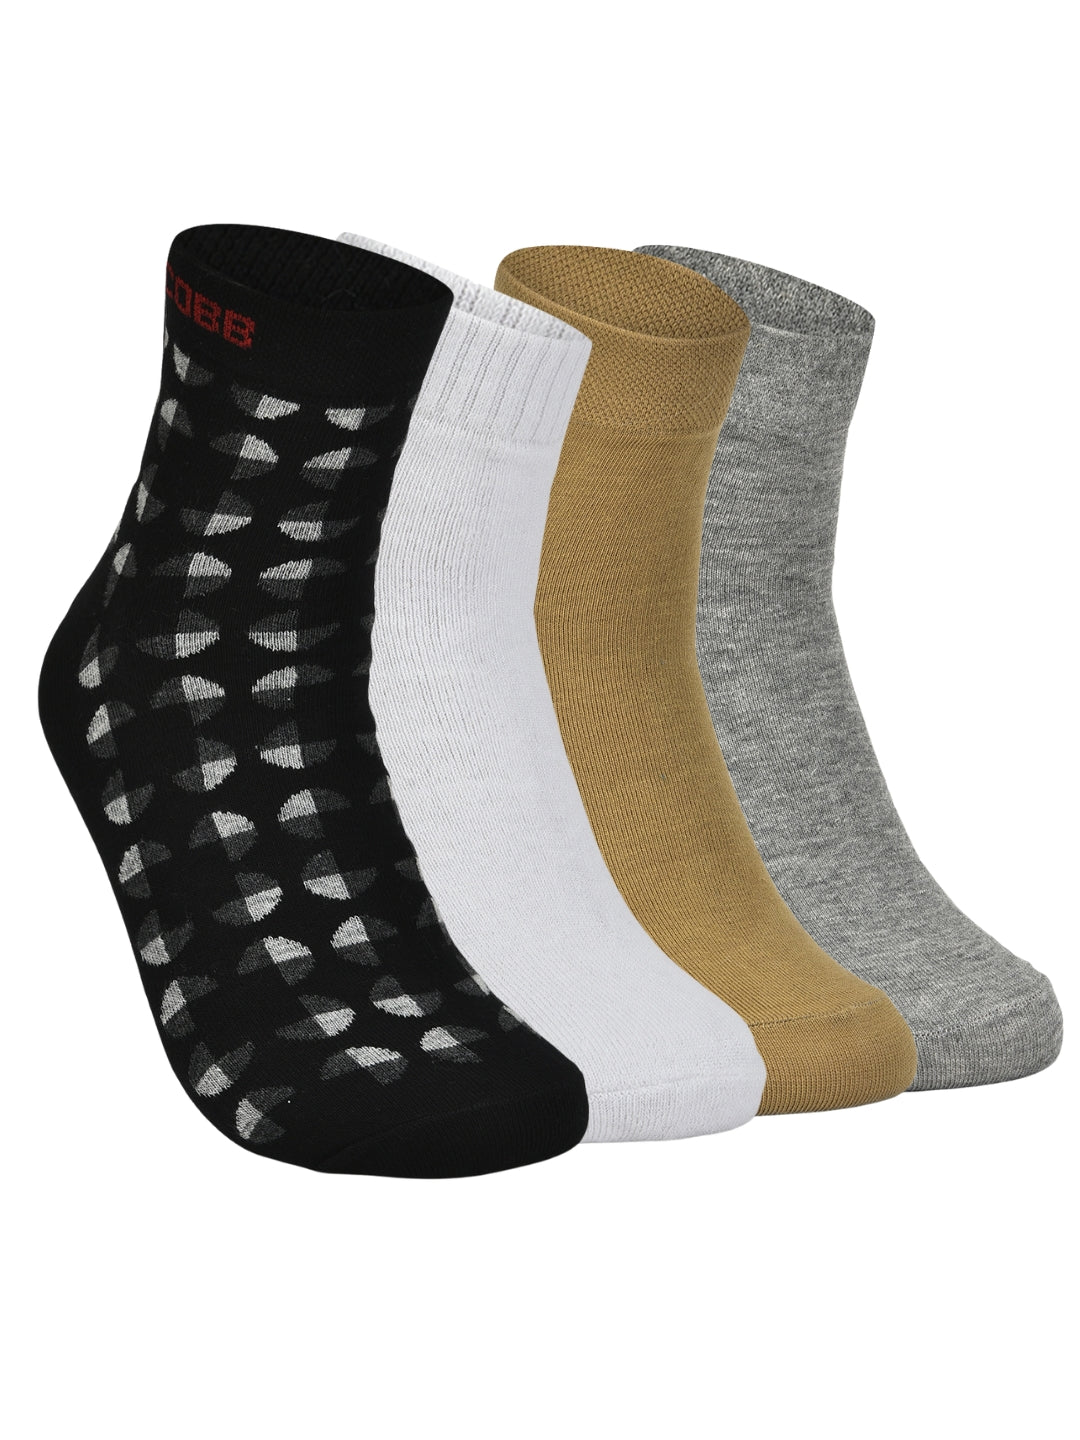 Cobb Multicolor Half Ankle Socks (Pack of 4) Assorted 4